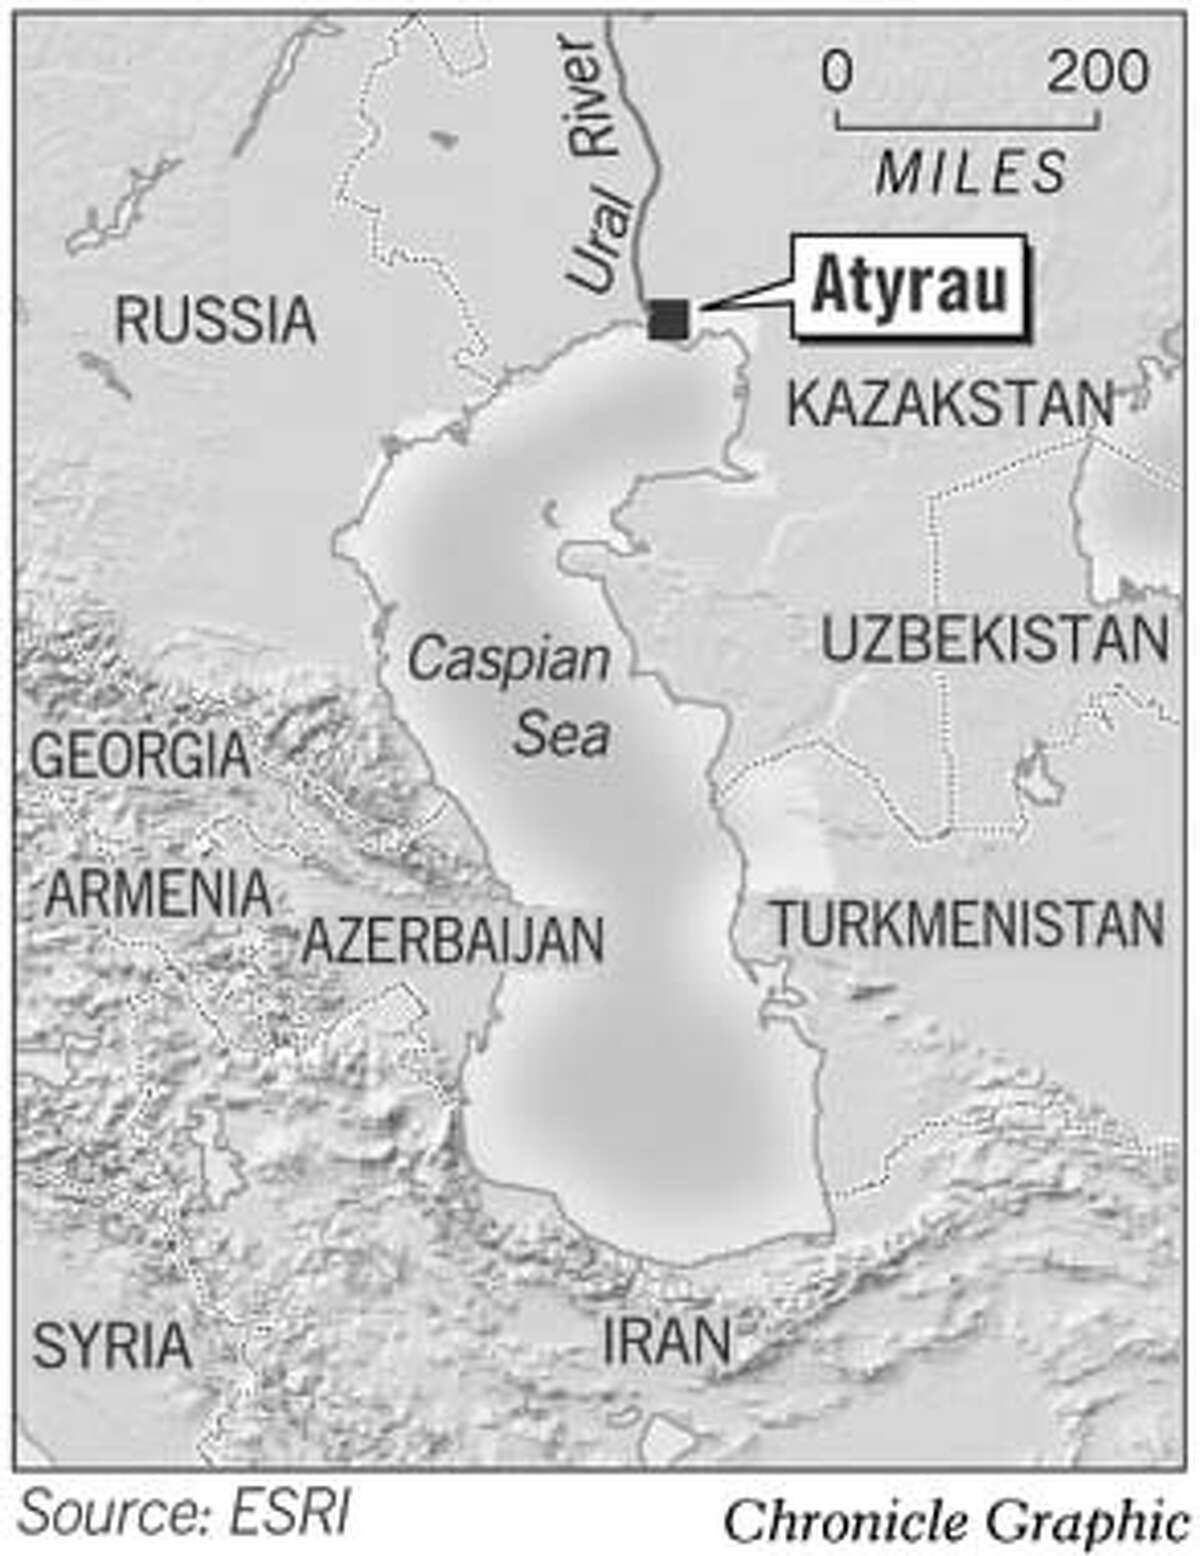 Atyrau, Kazakstan. Chronicle Graphic